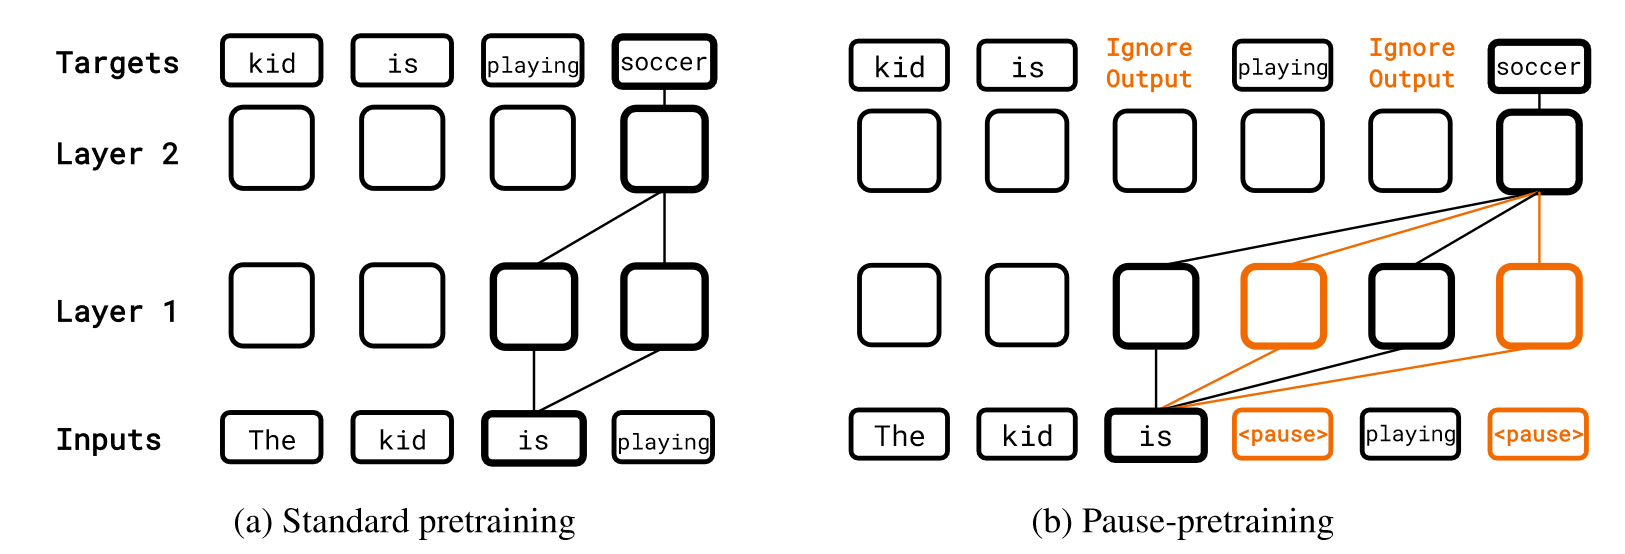 Figure 2: Standard vs. pause-pretraining.